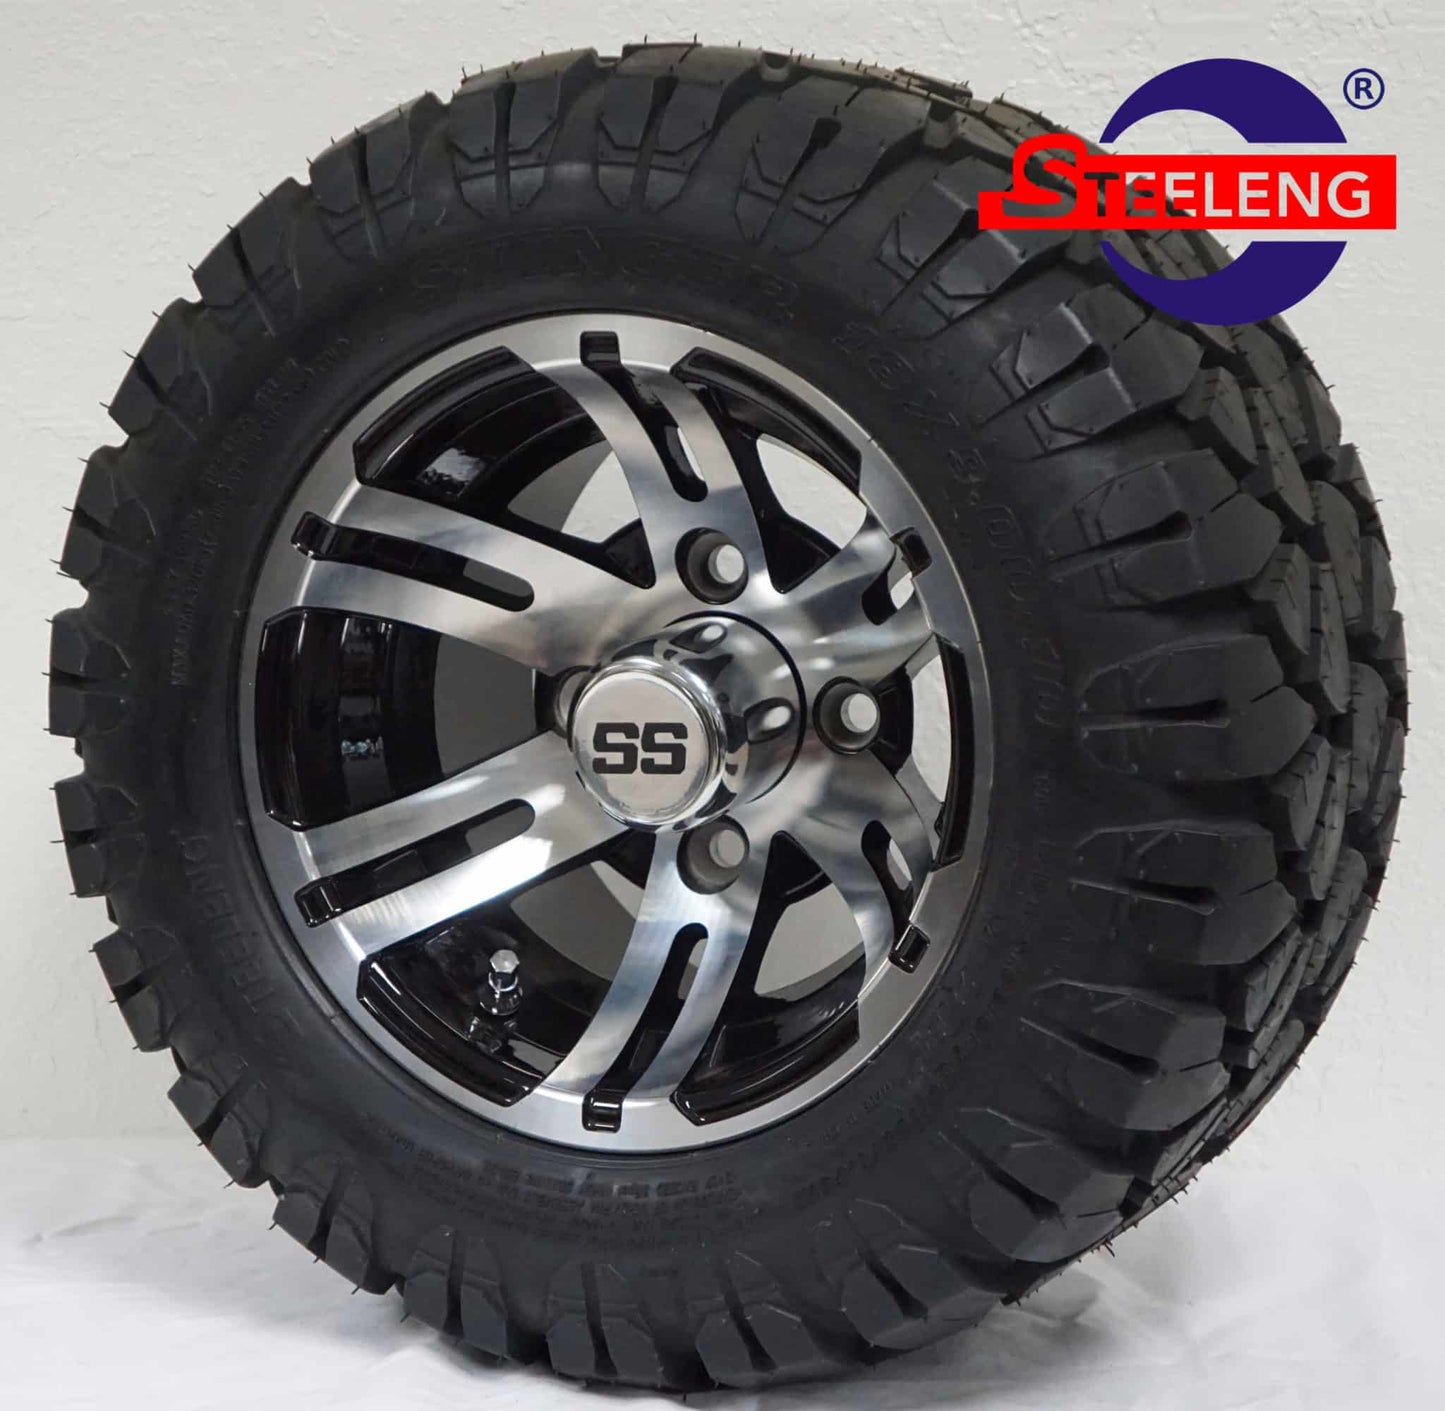 BNDL-TR1004-WH1004-LN0001-CC0001 – SGC 10″ Bulldog Machined/Black Wheel – Aluminum Alloy / STEELENG 18″x9″-10″ STINGER All Terrain Tire DOT approved - Set of 4